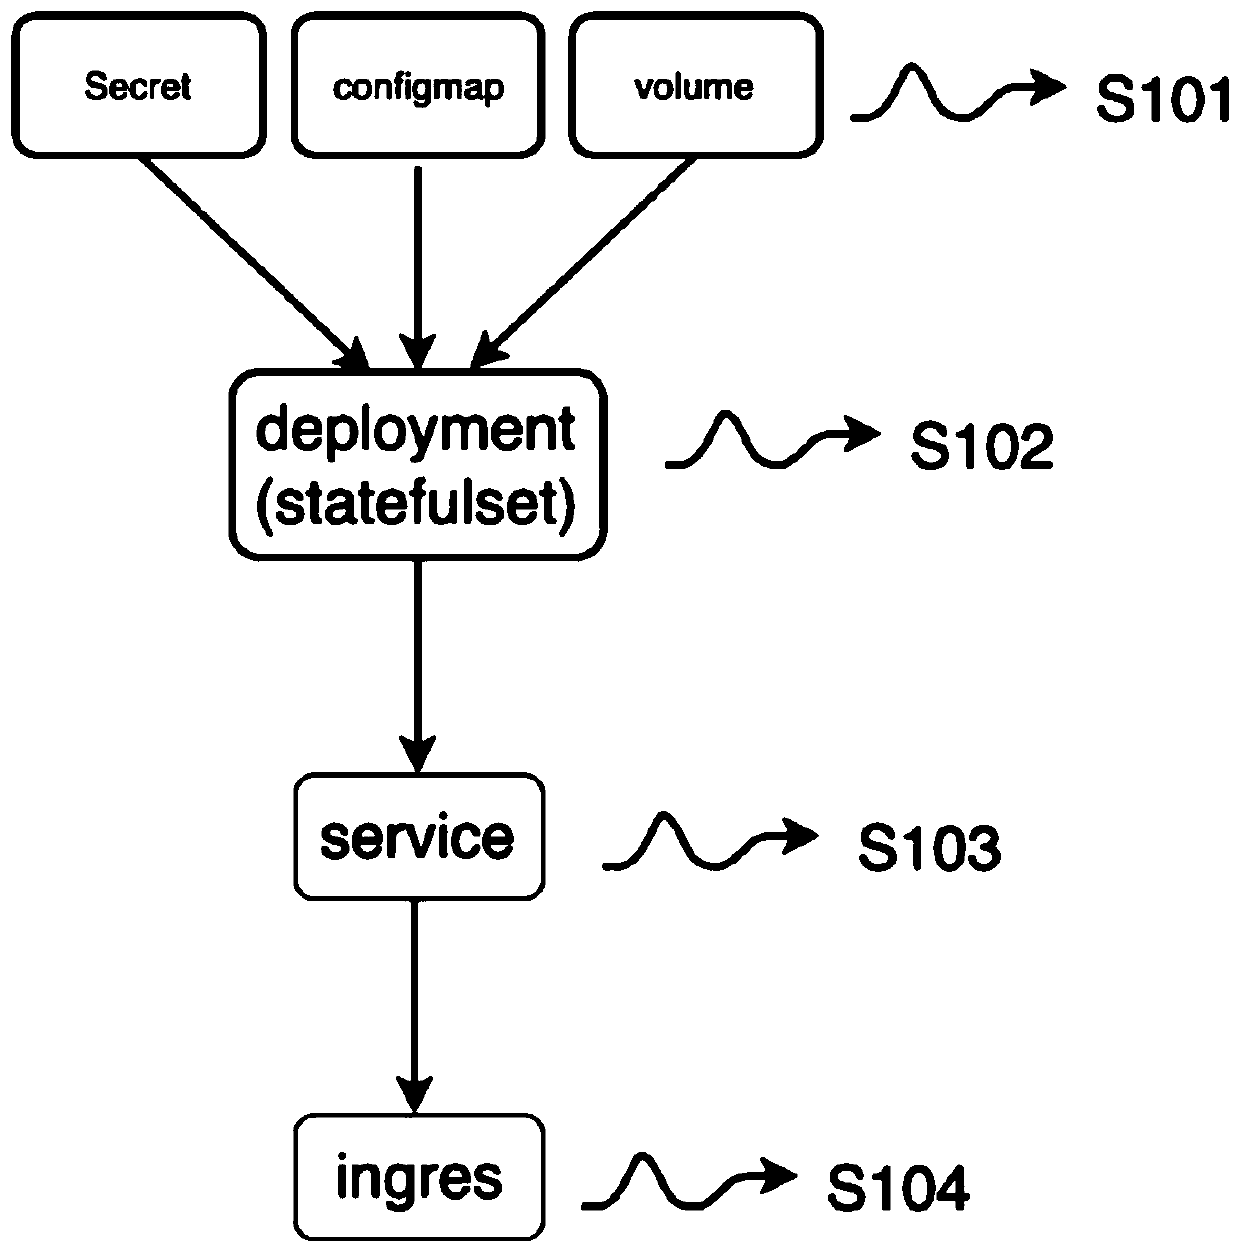 Application arrangement and deployment method based on kubernetes